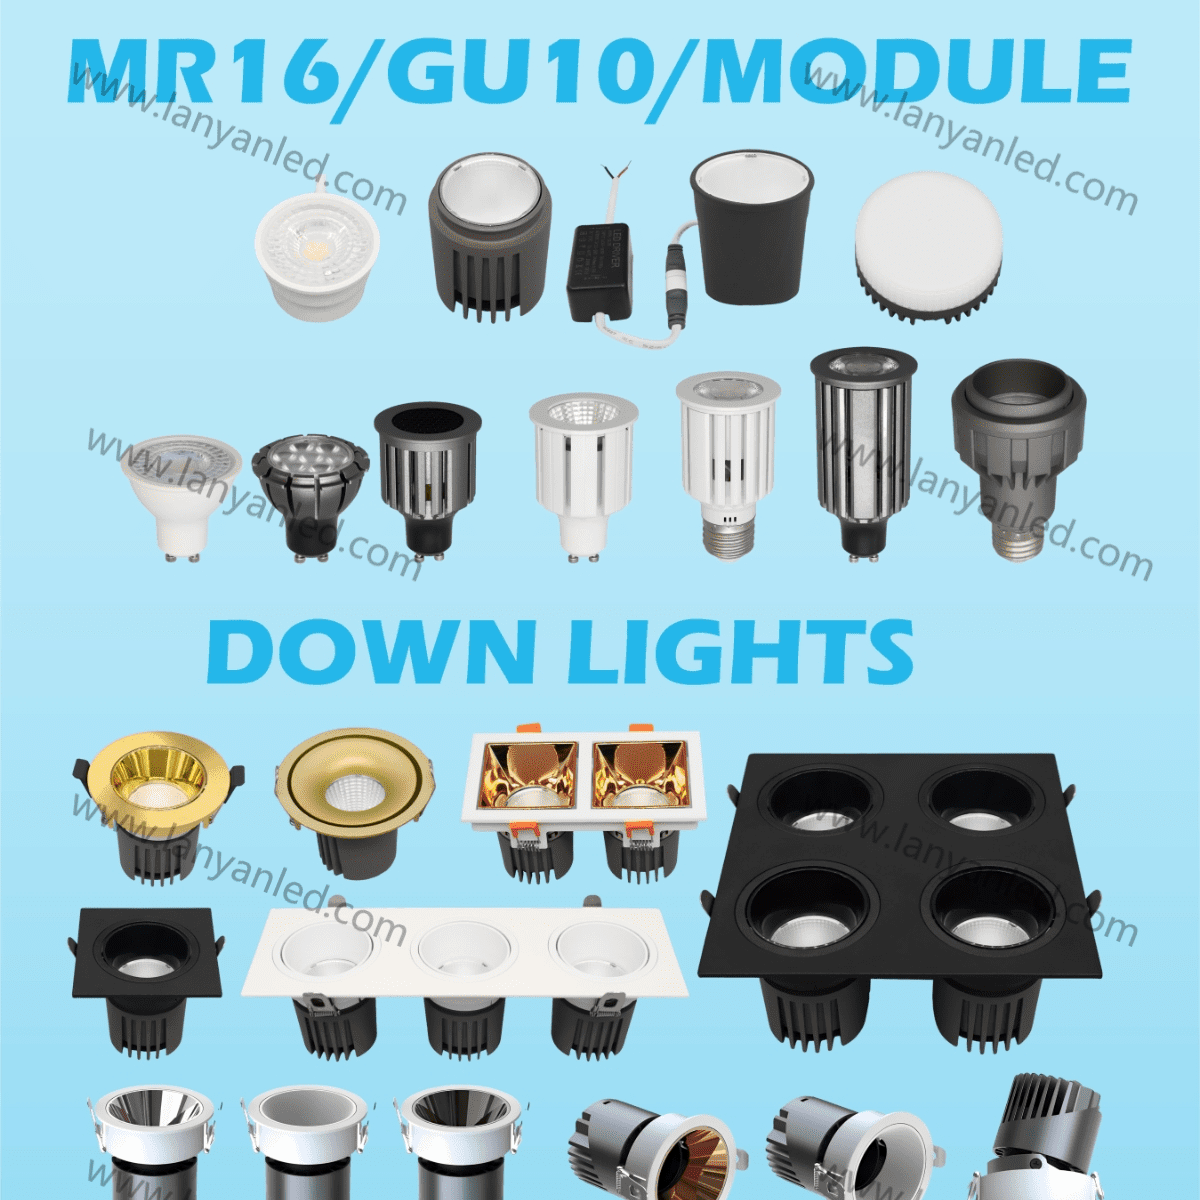 MR16 GU10 LED MODULE, DOWNLIGHT PAENANT LIGHT SERIES FIXTURES